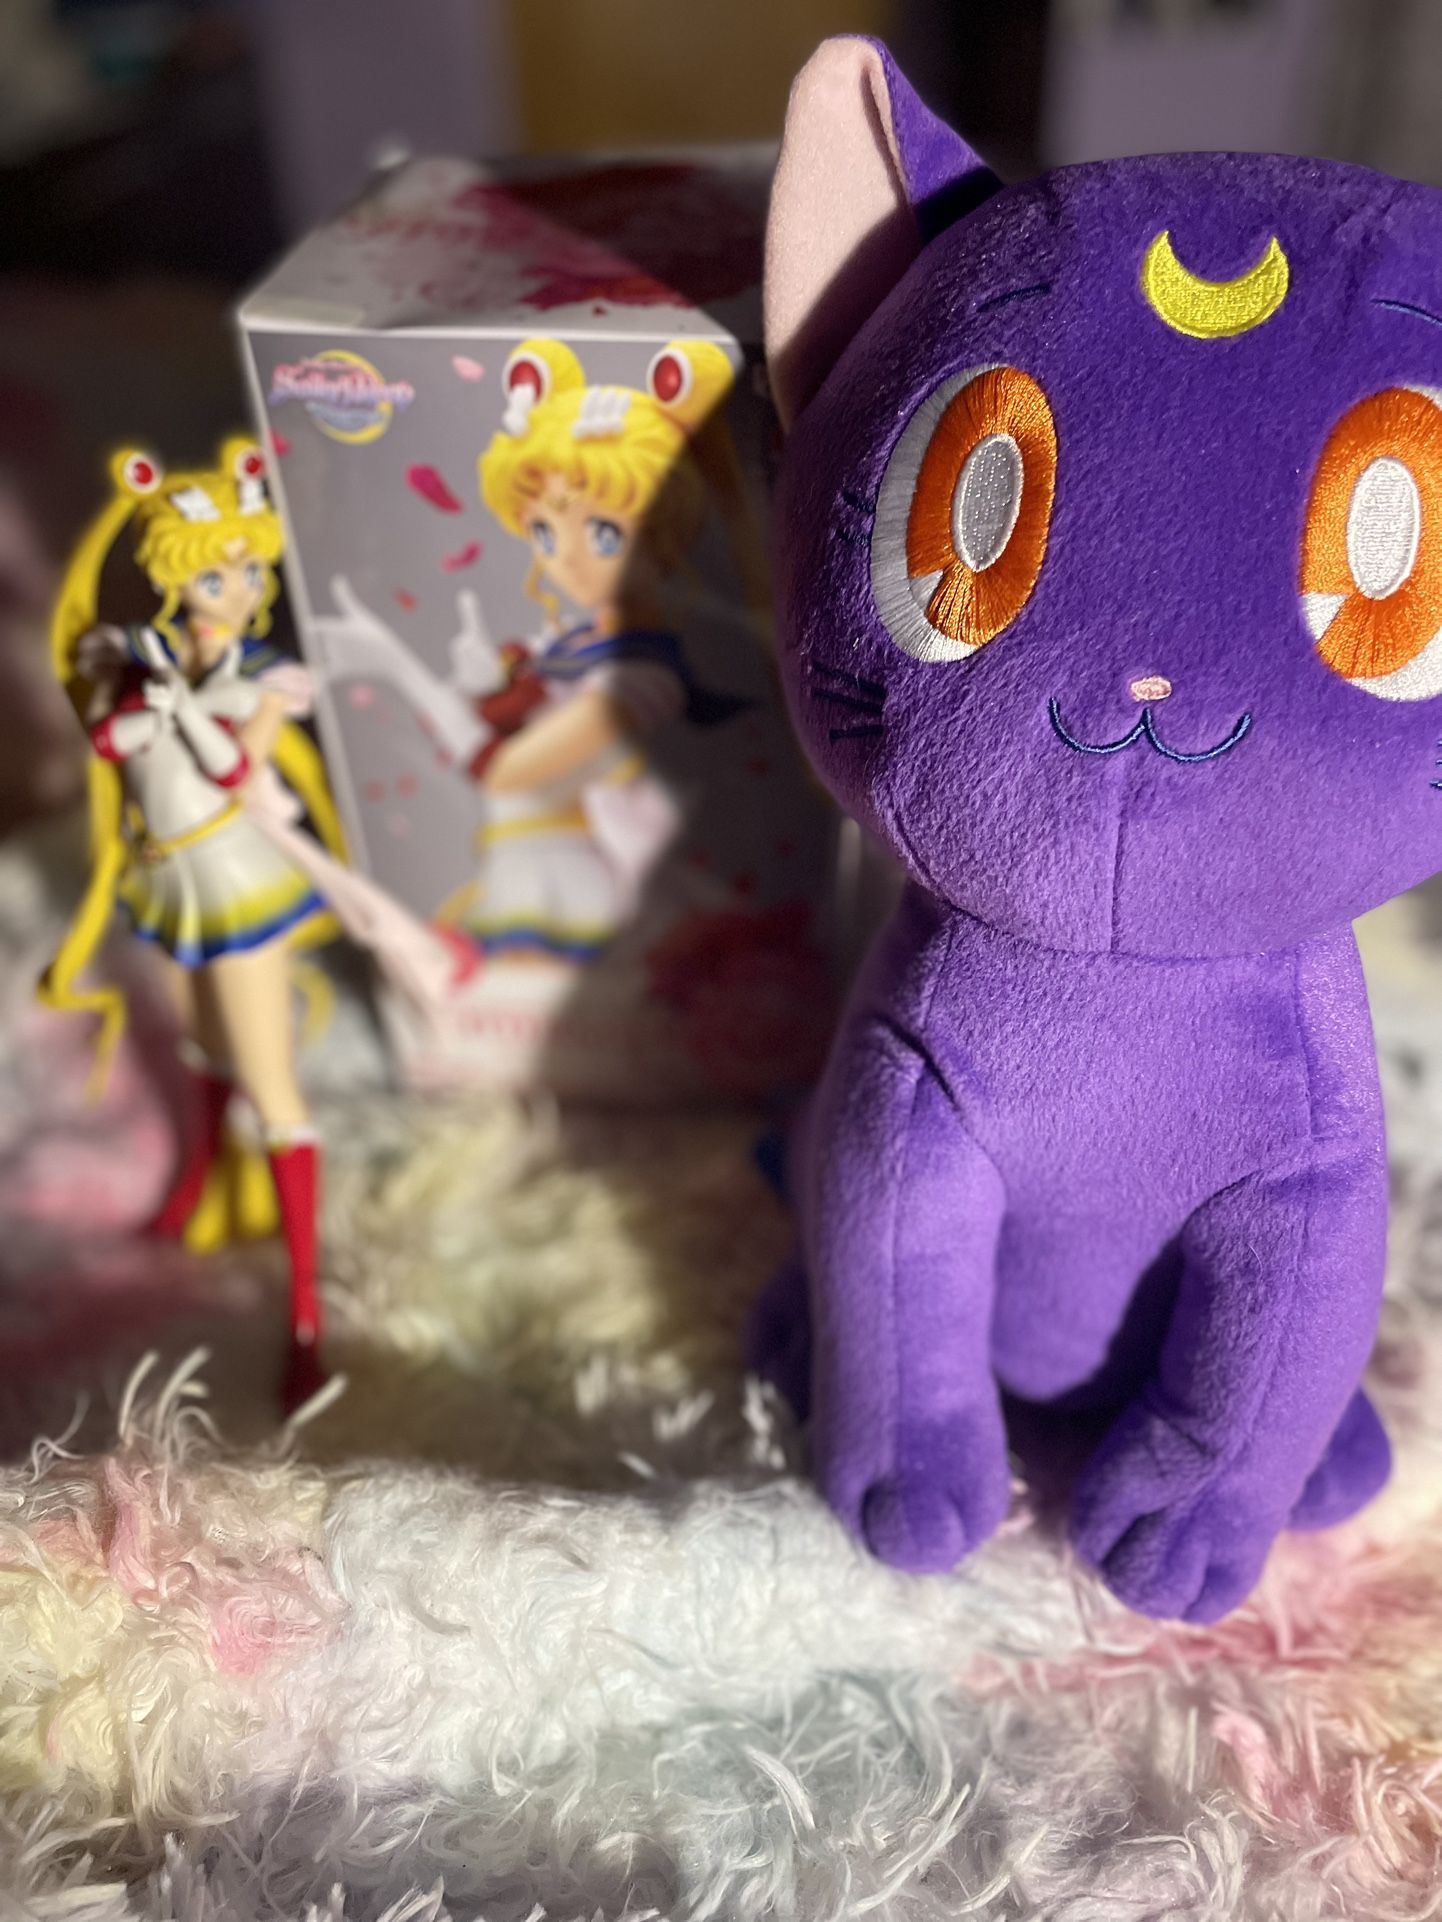 Sailor Moon Figure and Luna Plush